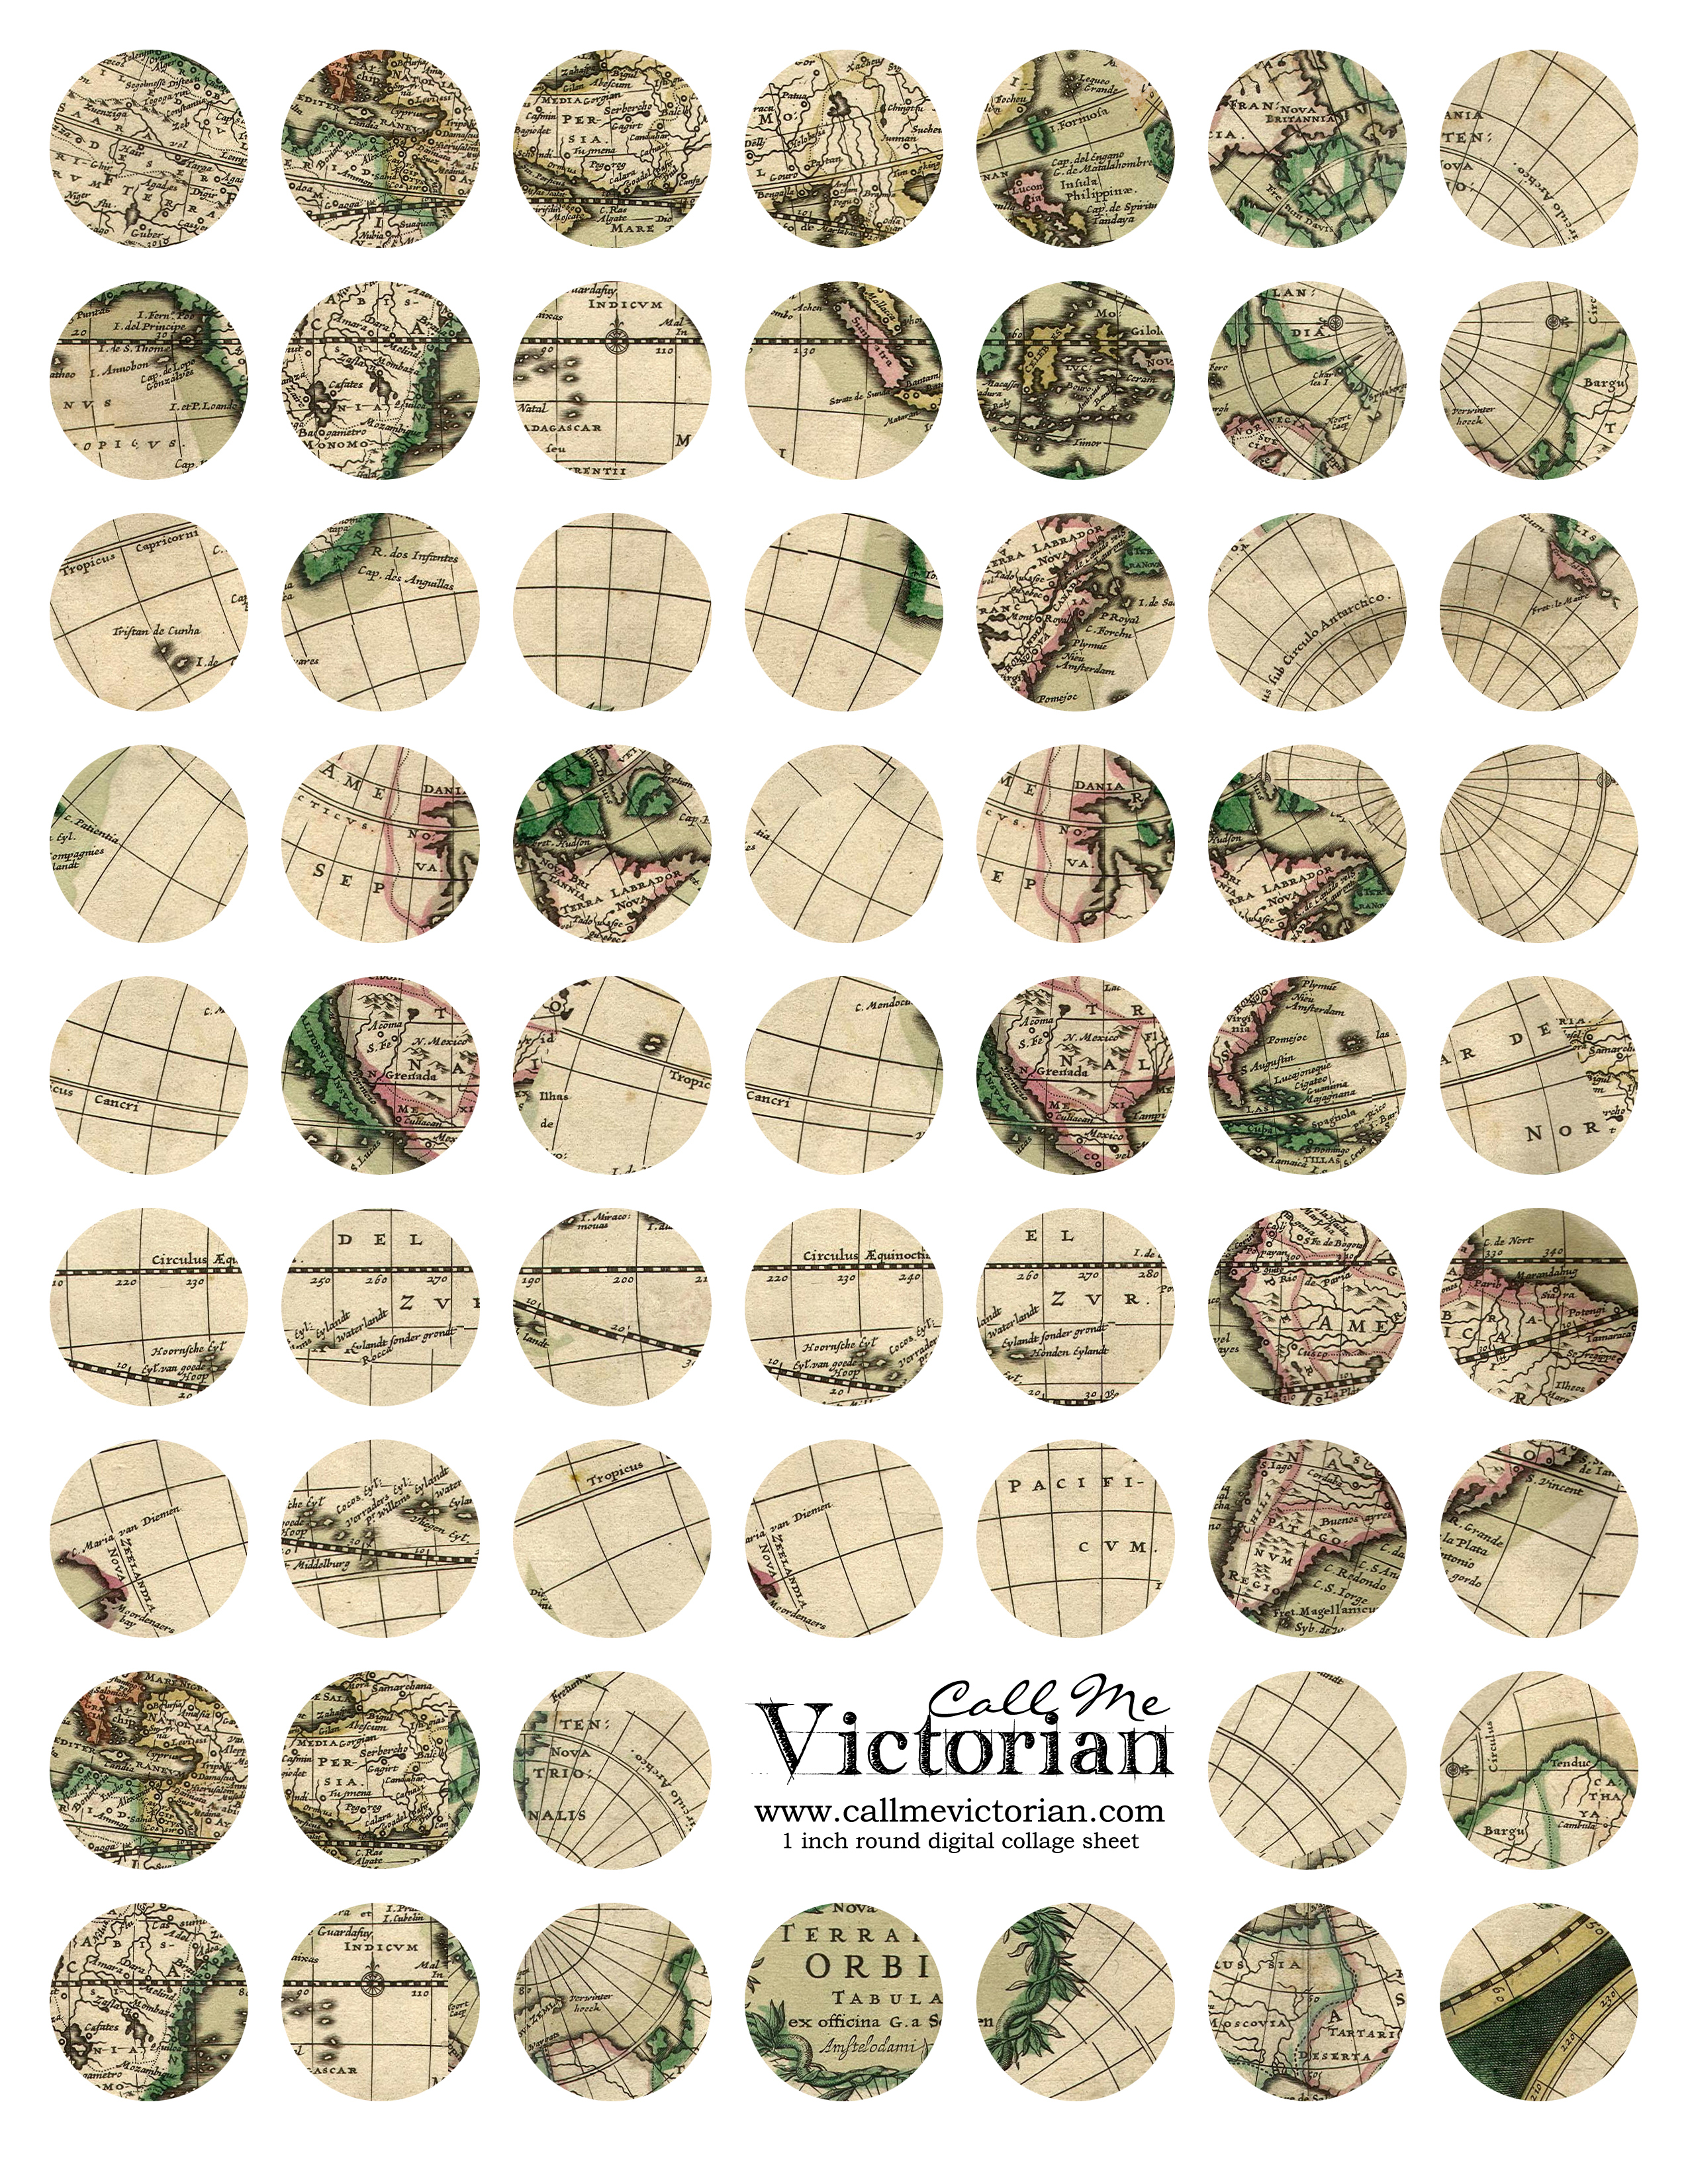 Free Digital Collage Sheet Vintage Maps | Call Me Victorian - Free Printable Digital Collage Sheets